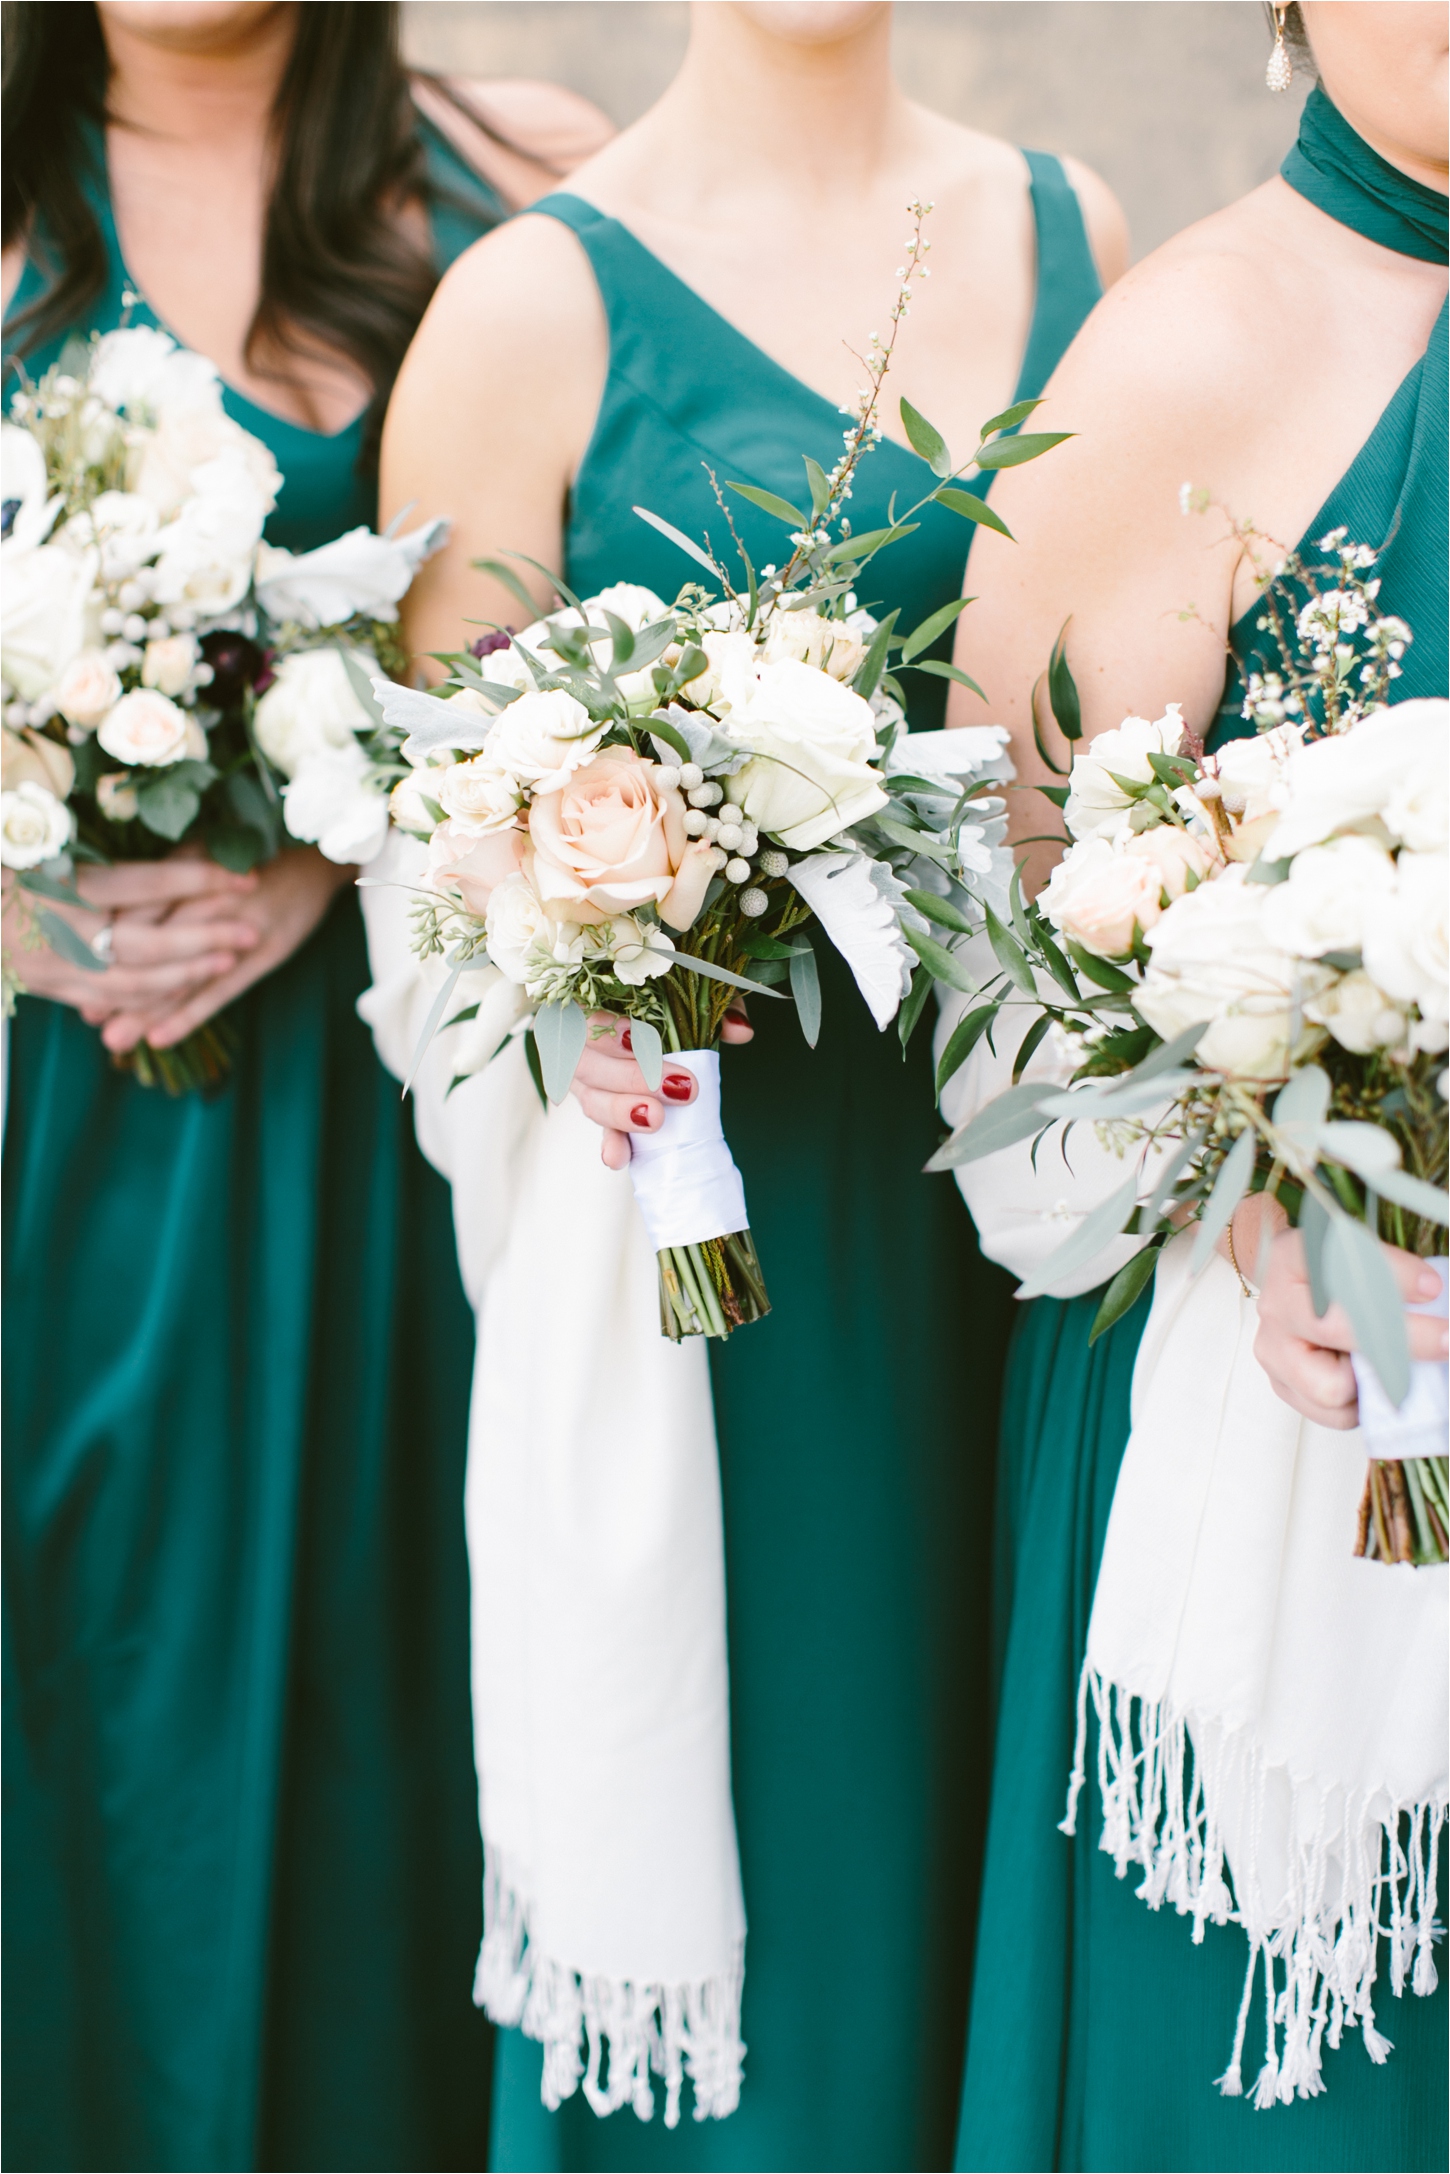 Jade green bridesmaid dresses with neutral winter florals by Sullivan Owen